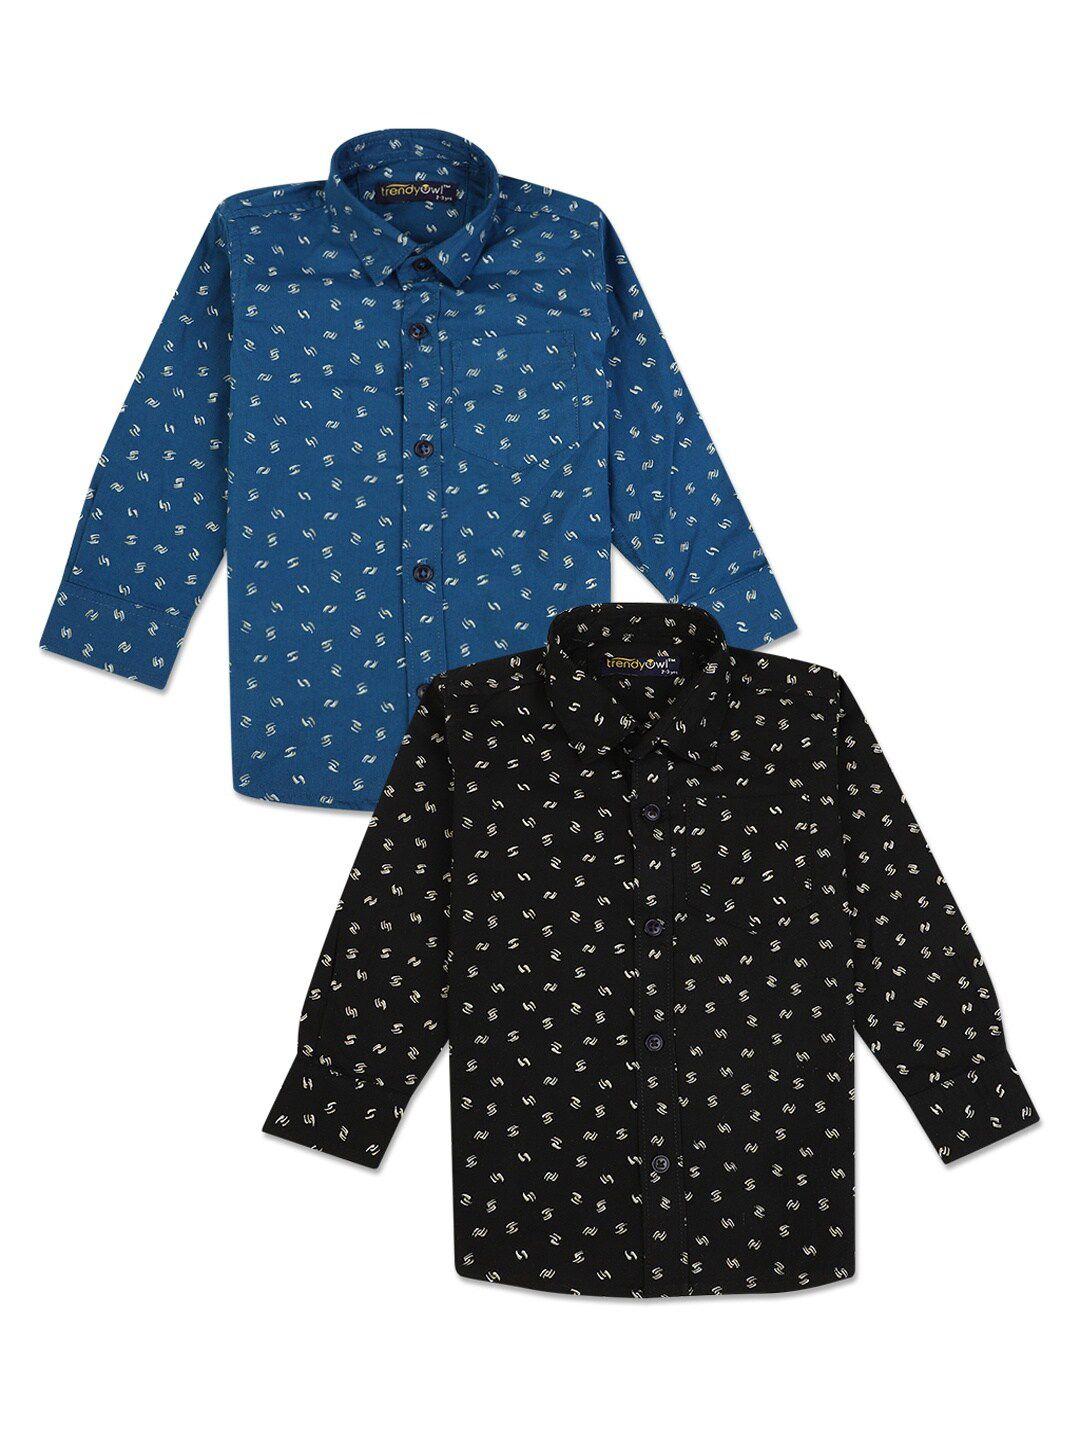 v-mart boys pack of 2 blue & black standard printed cotton casual shirts